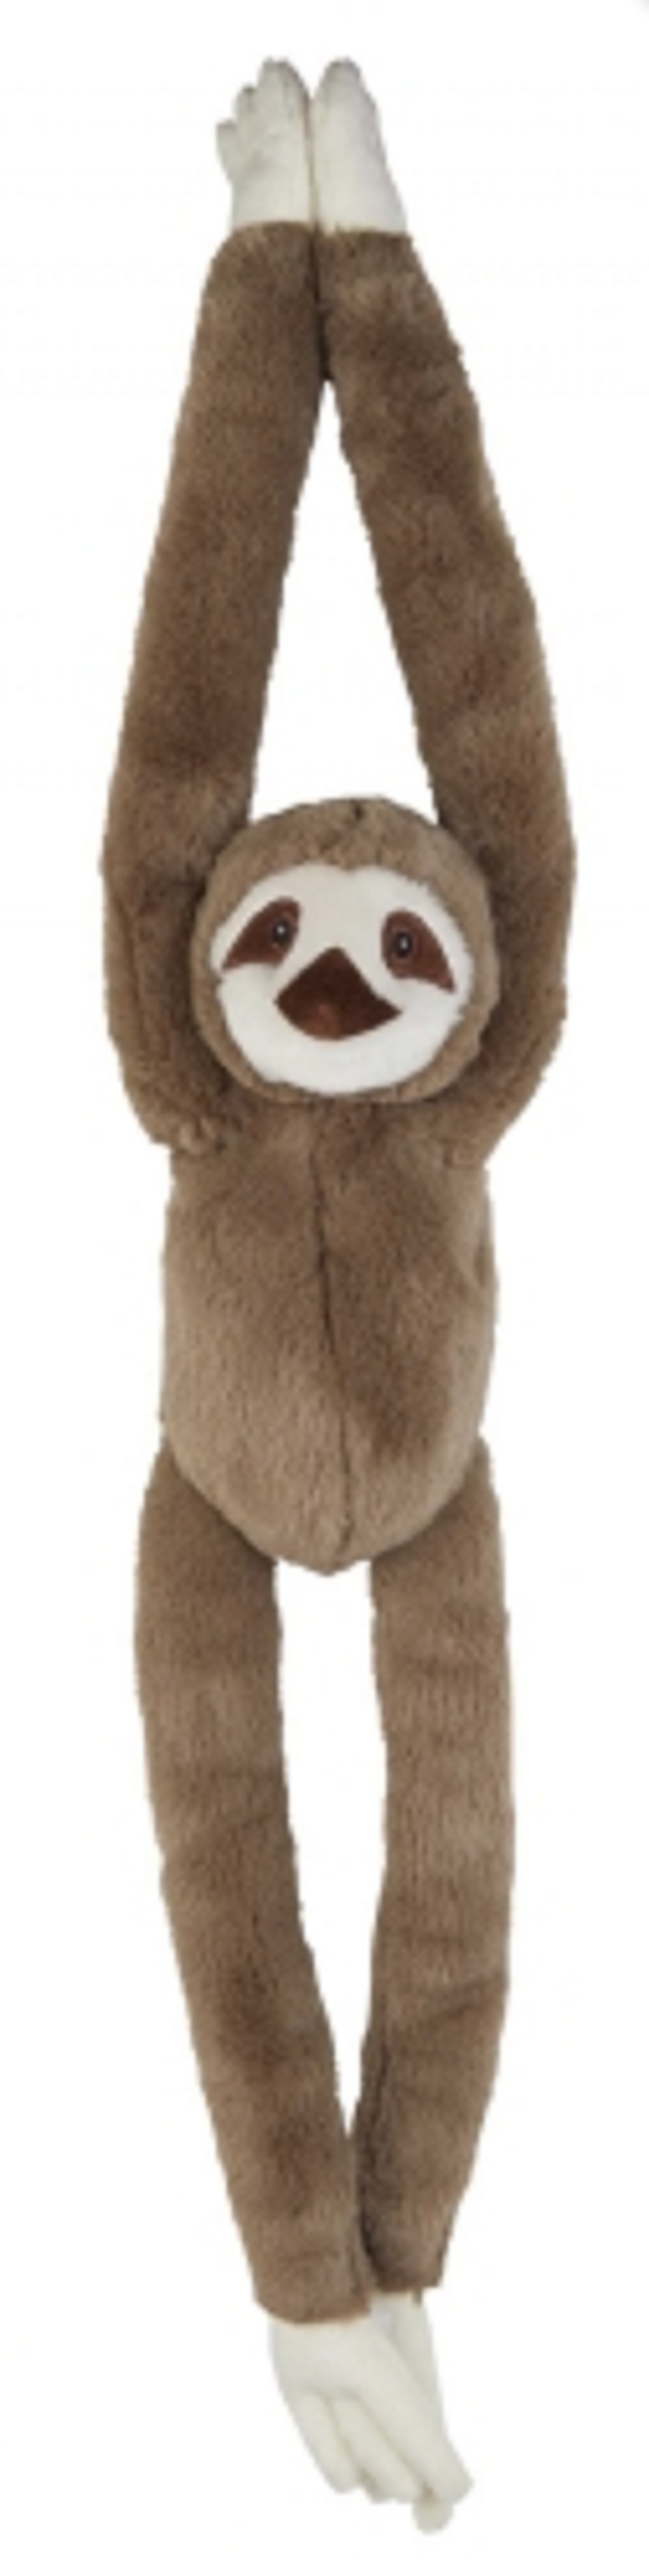 Ravensden Soft Toy Plush Hanging Sloth 75cm